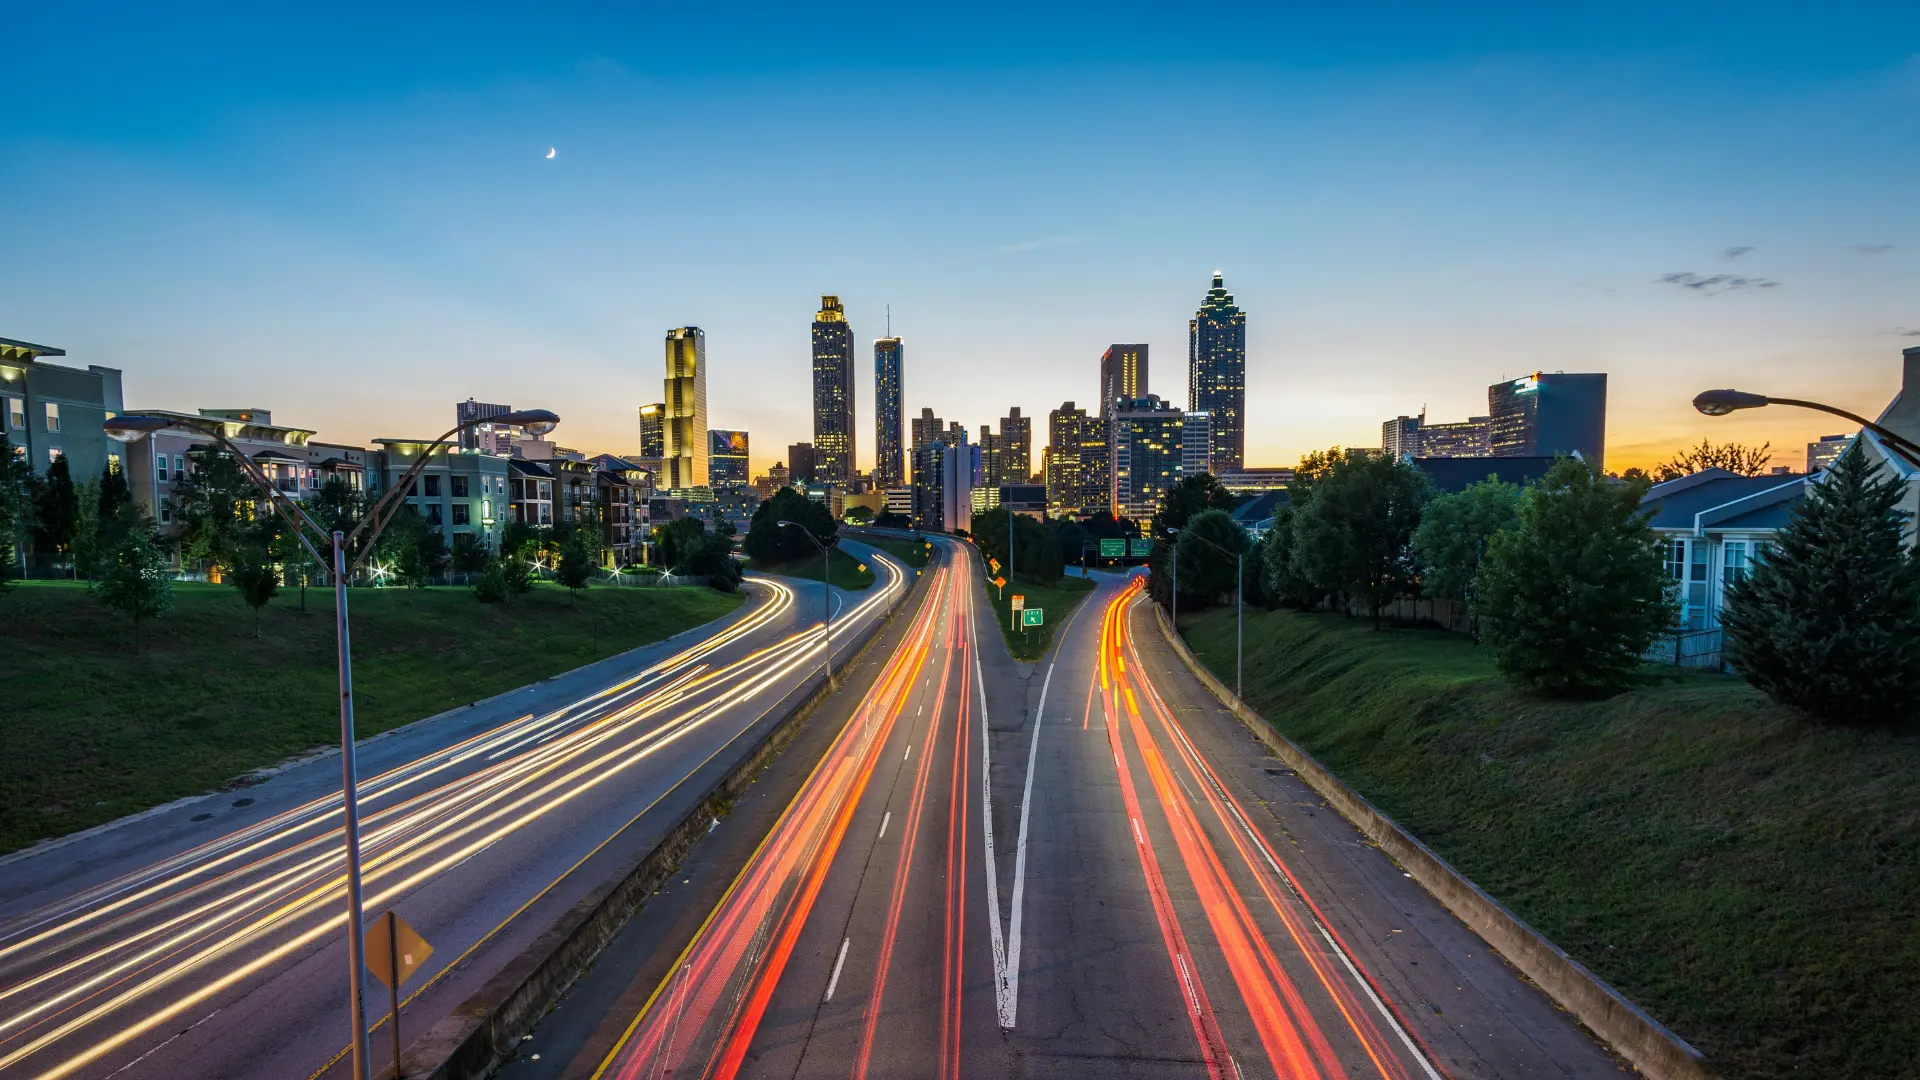 Night view of Atlanta's skyline with light trails